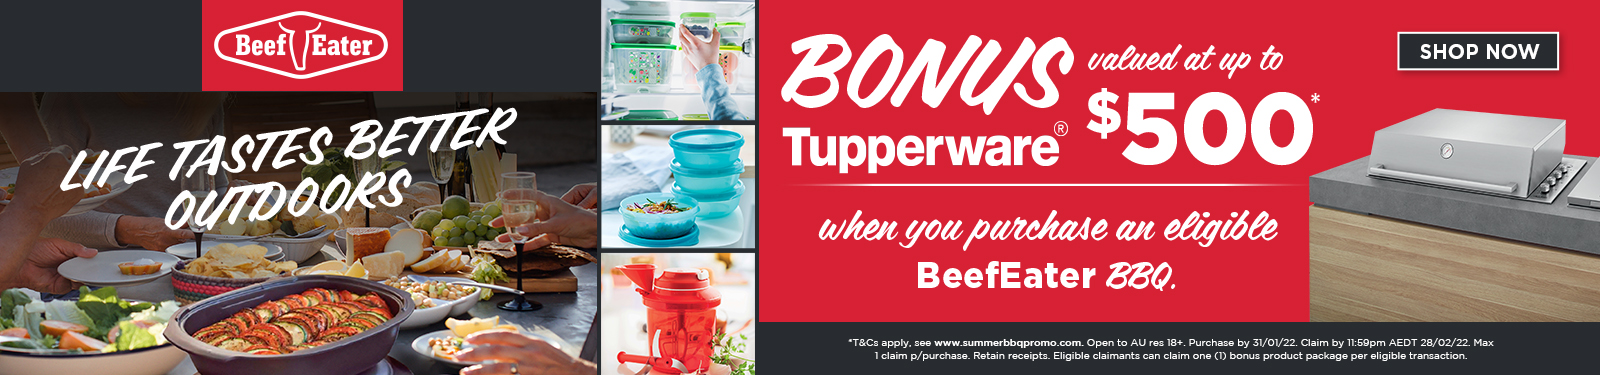 Bonus Tupperware with Beefeater BBQ